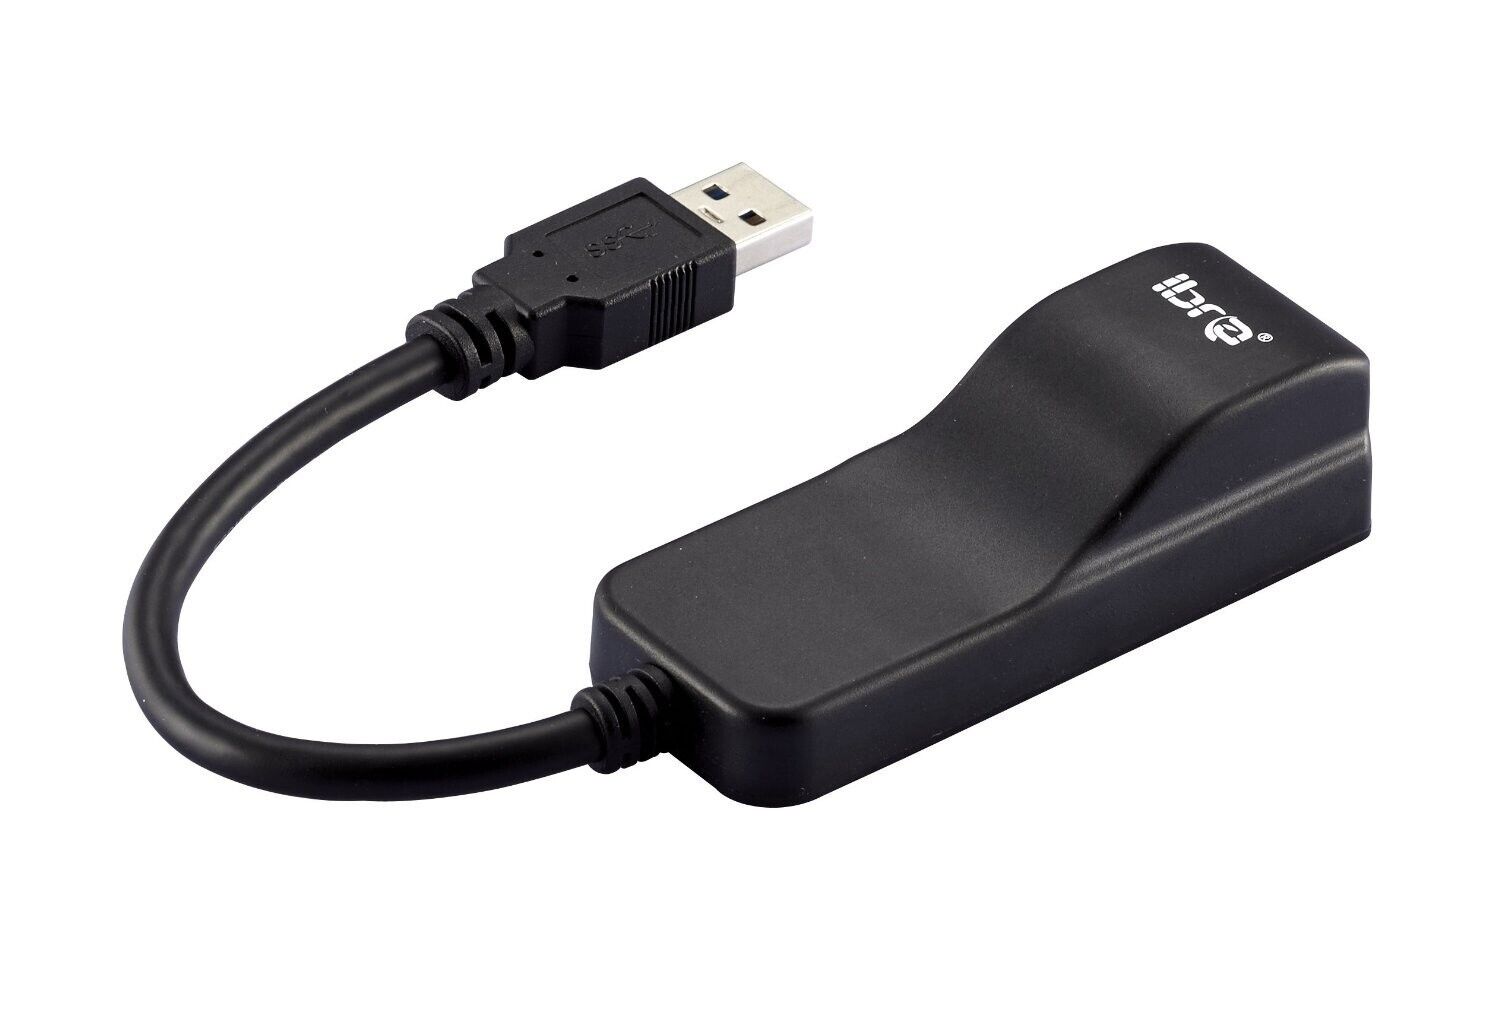 SuperSpeed USB 3.0 to RJ45 Gigabit Ethernet Adapter in Black